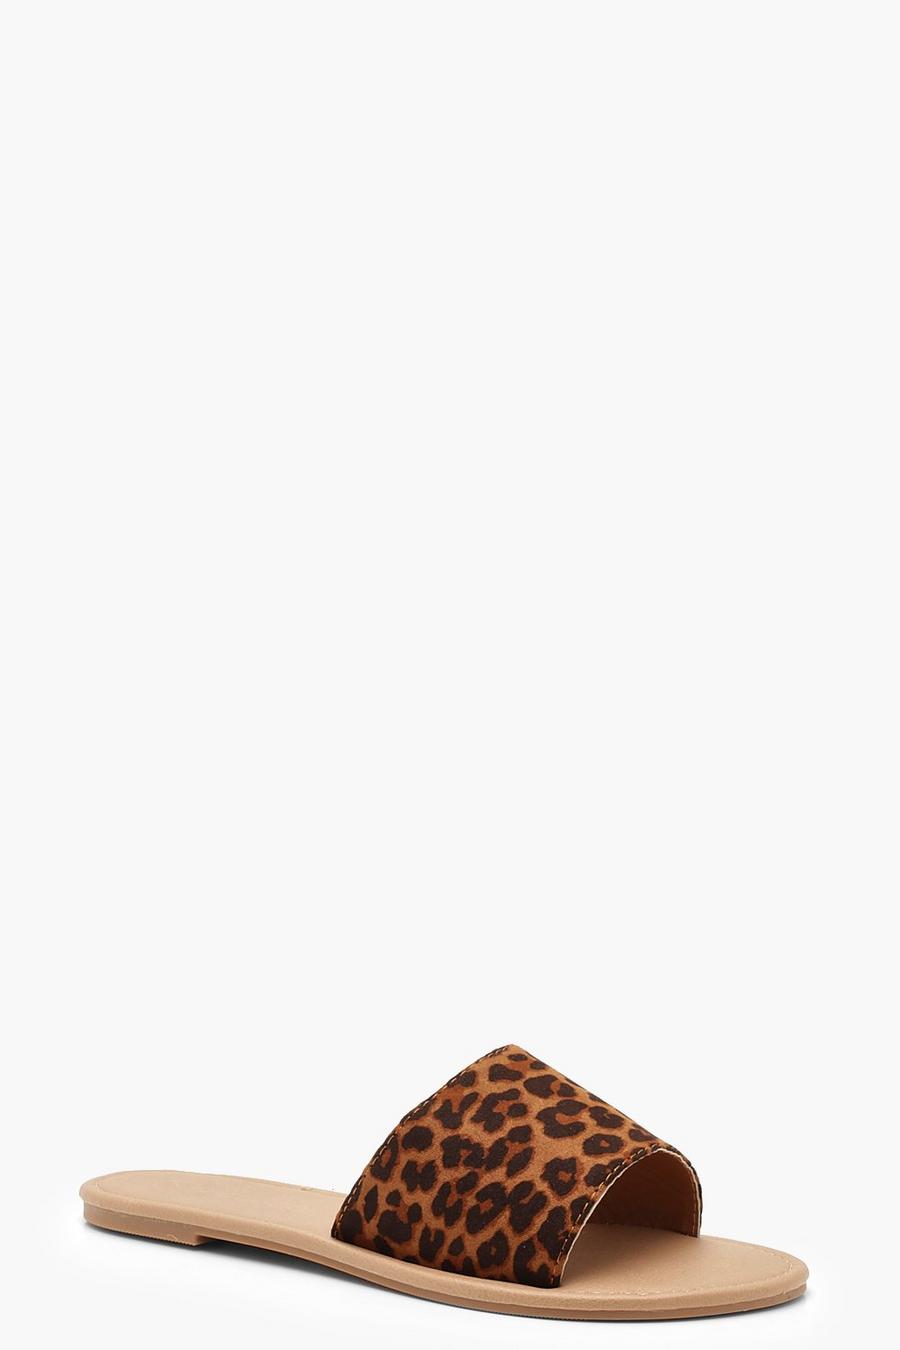 Luipaard multi Basic Luipaardprint Slippers image number 1